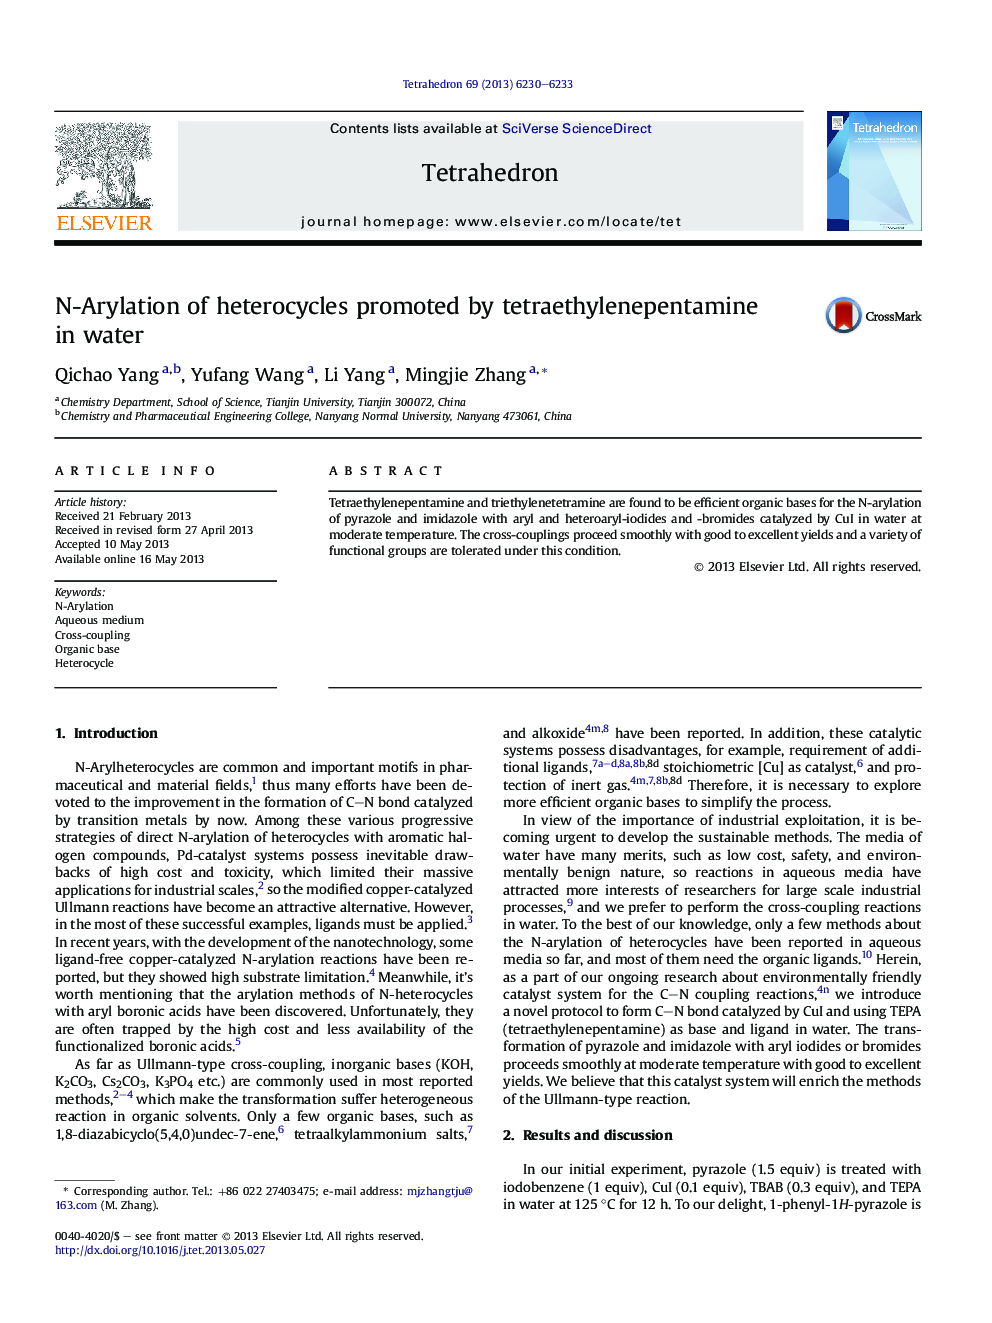 N-Arylation of heterocycles promoted by tetraethylenepentamine inÂ water